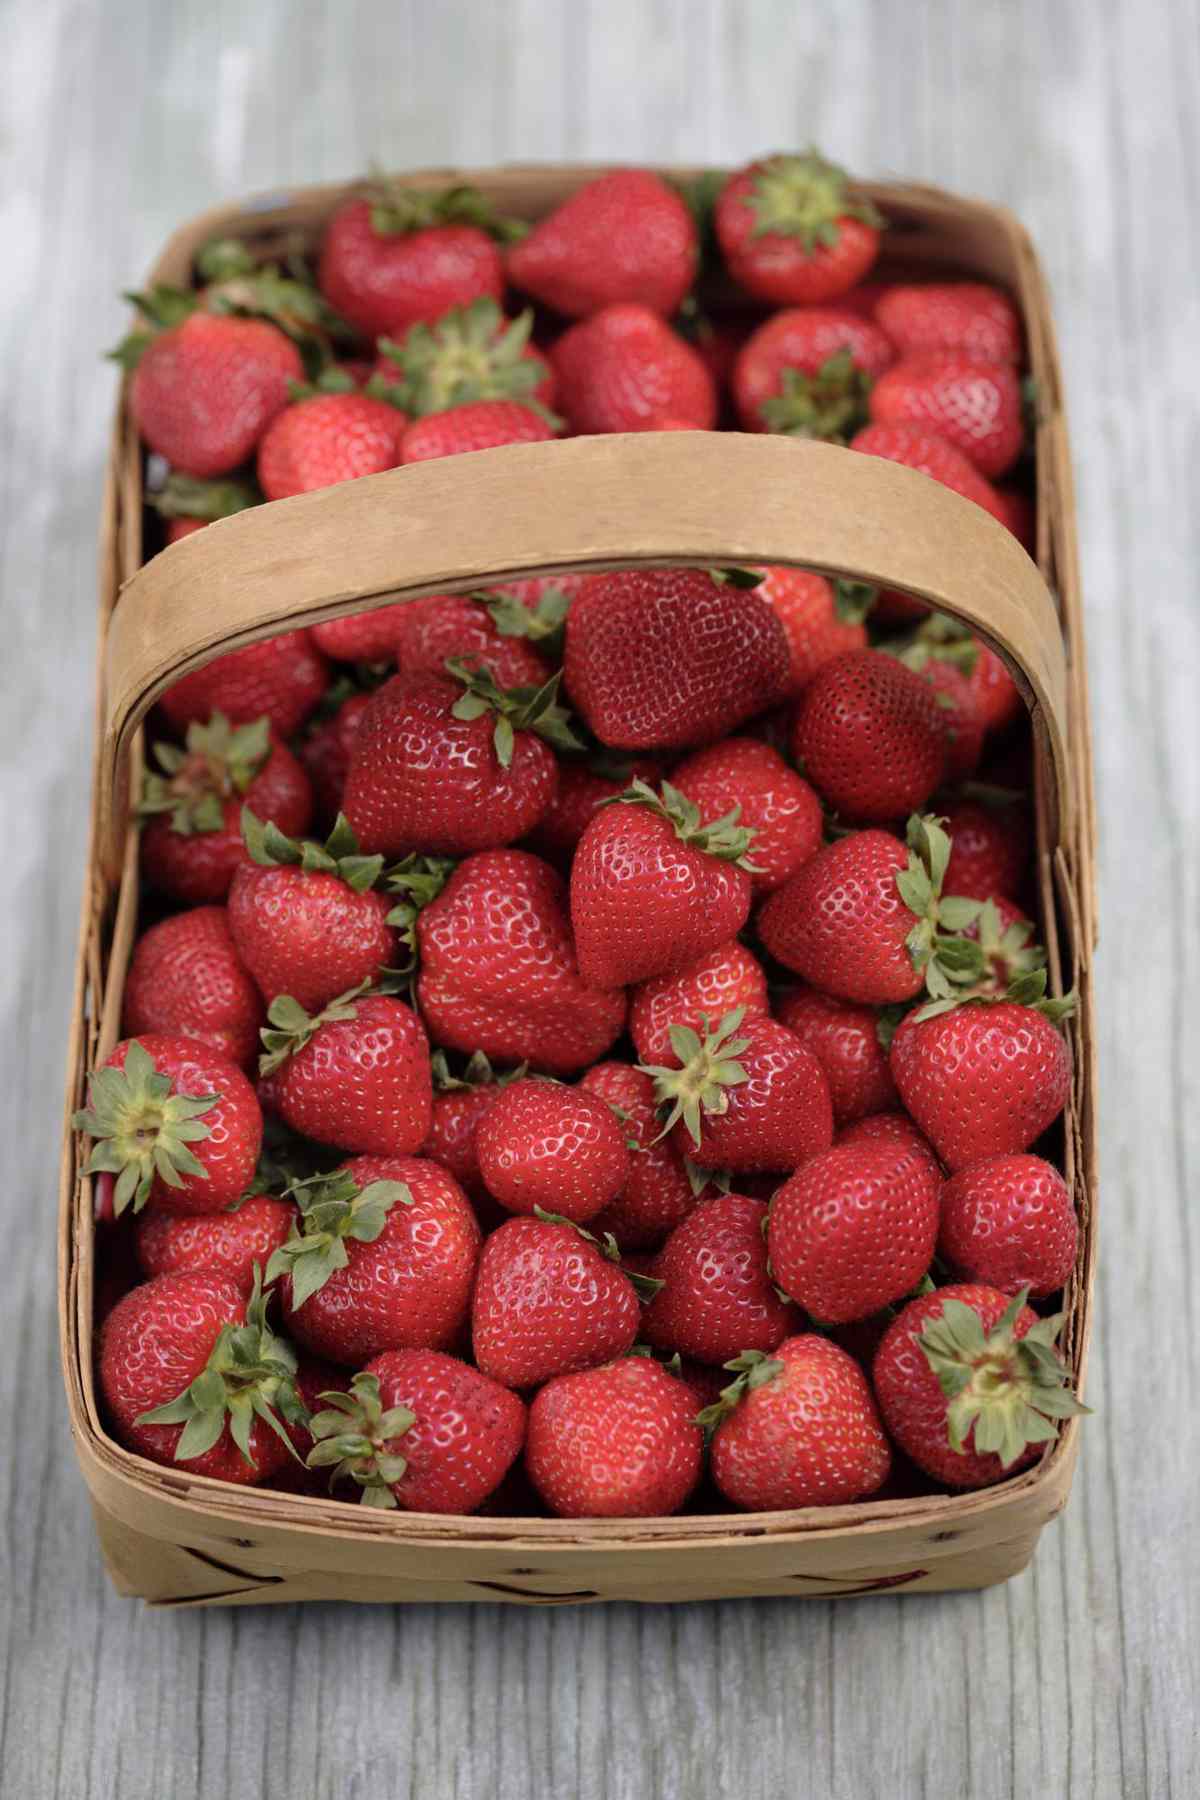 8 of 13 Strawberries